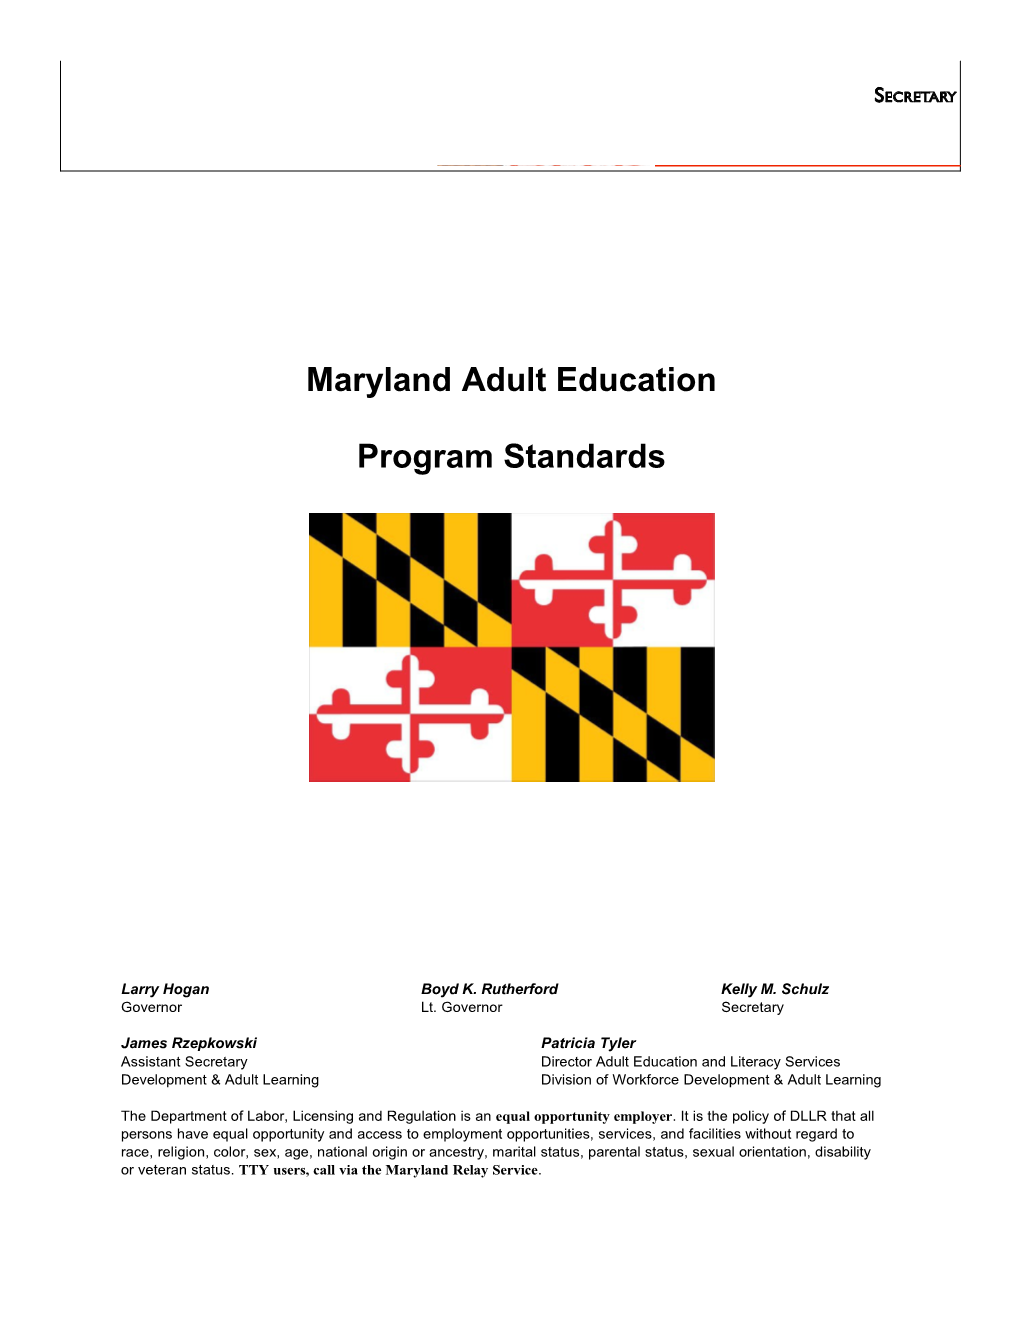 Maryland Adult Education Program Standards